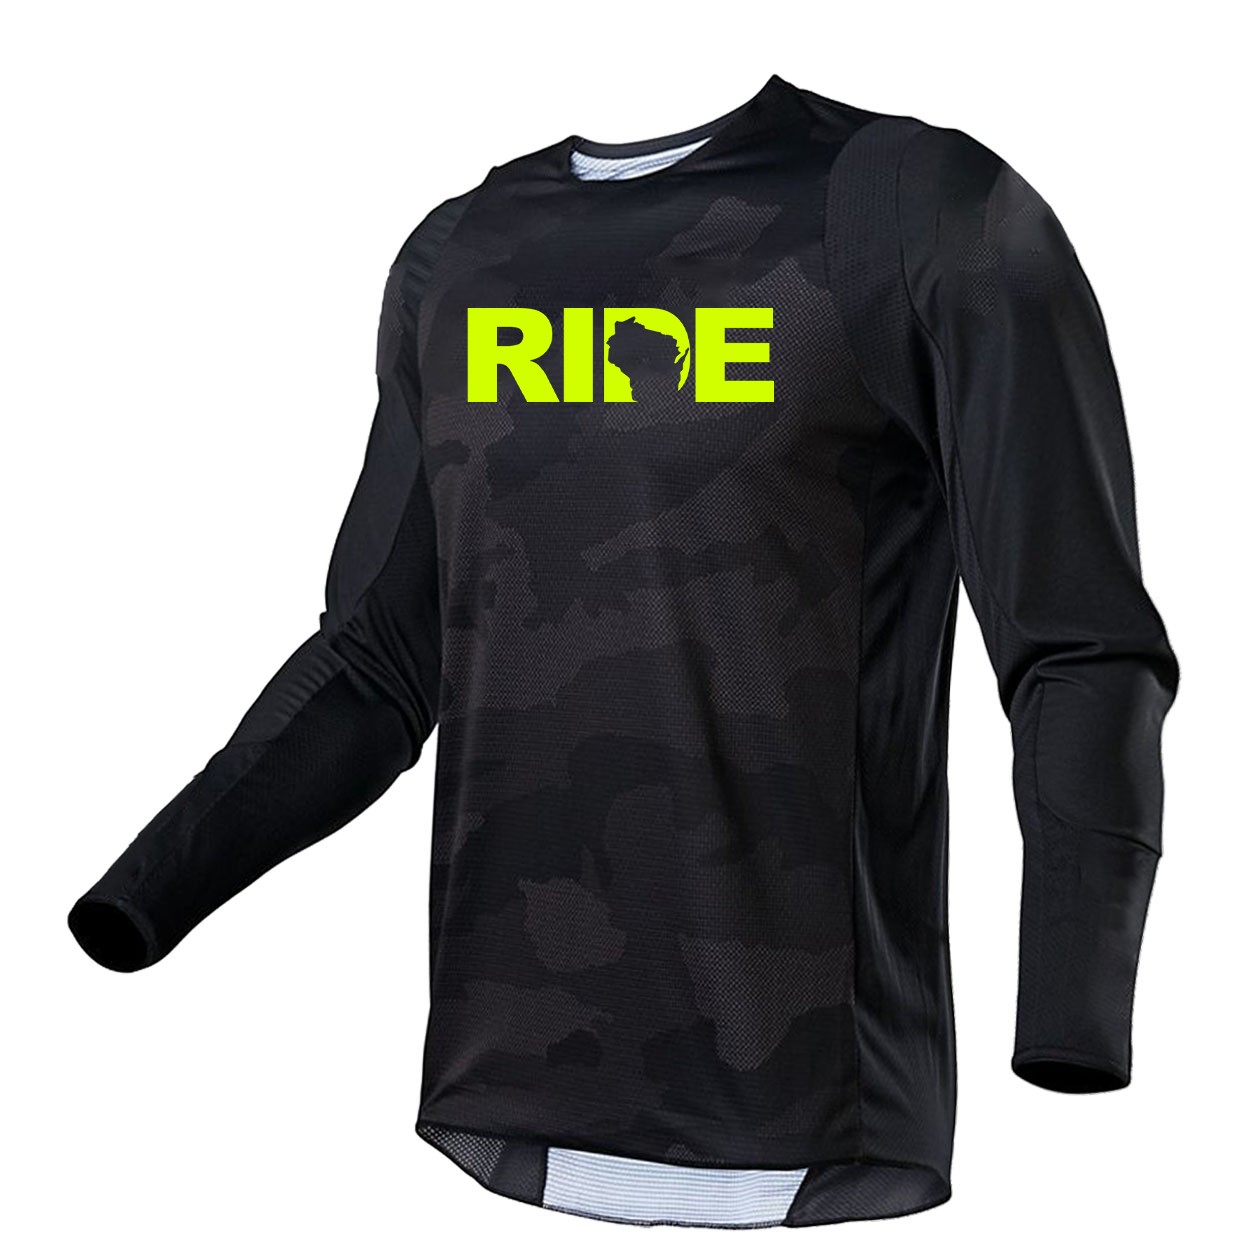 Ride Wisconsin Classic Performance Jersey Long Sleeve Shirt Black Camo (Hi-Vis Logo)